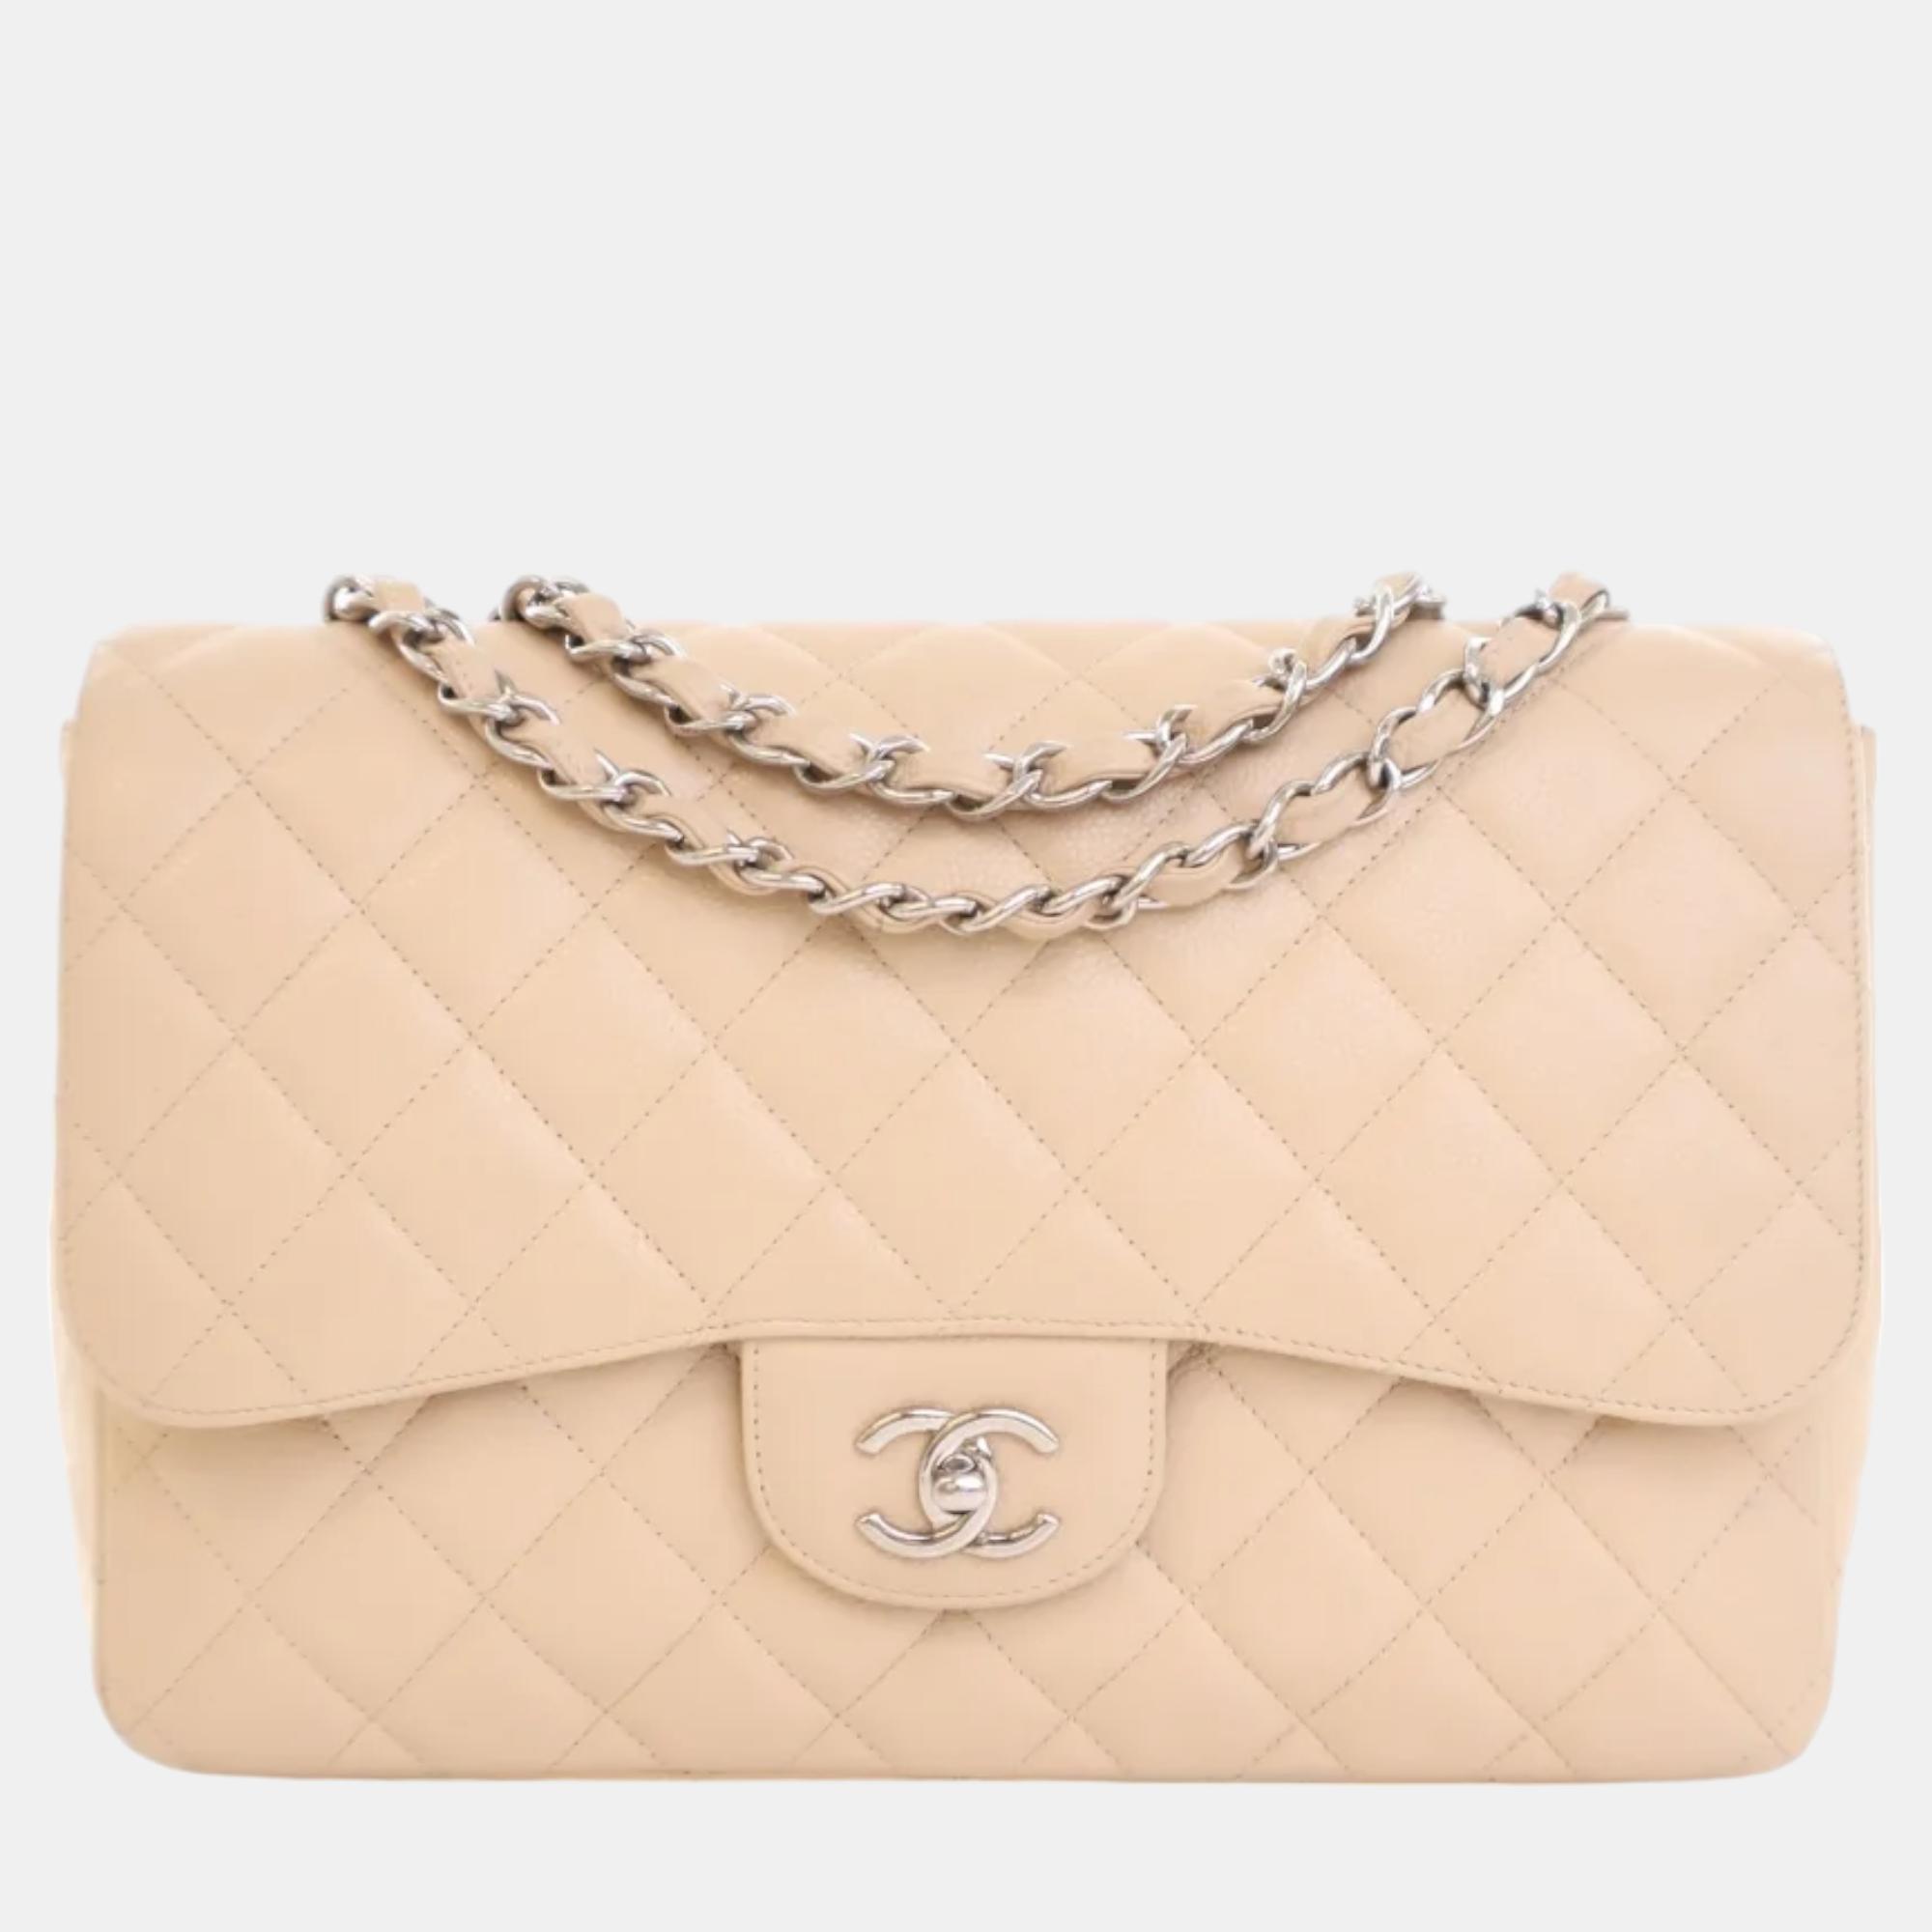 Chanel beige leather jumbo classic single flap shoulder bag